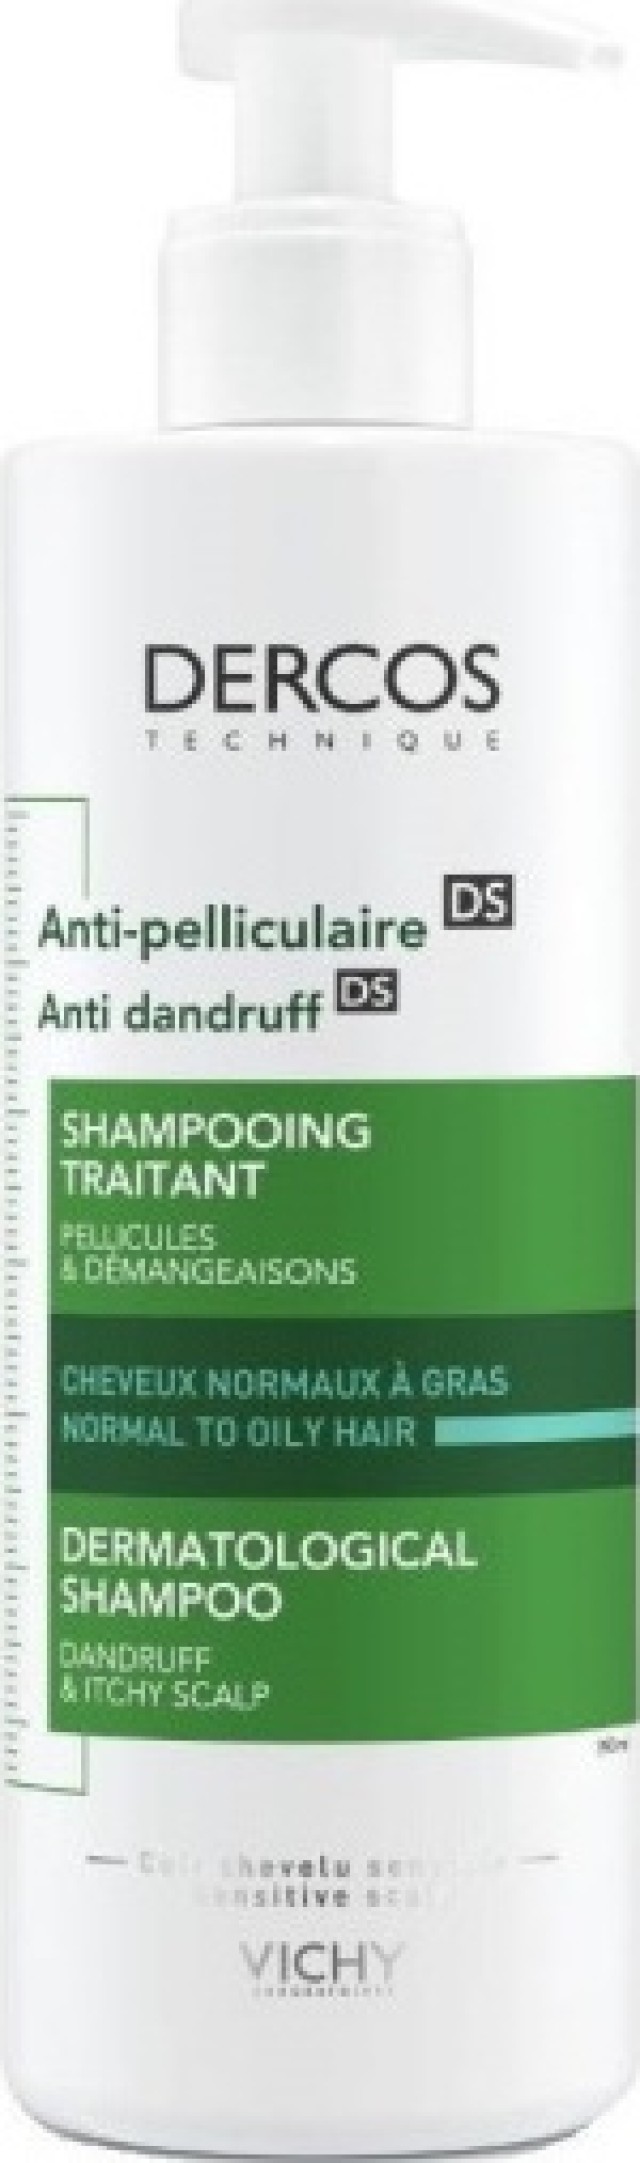 Vichy Dercos Anti-Dandruff DS Shampoo for Normal to Oily Hair Αντιπυτιριδικό Σαμπουάν Για Κανονικά-Λιπαρά Μαλλιά 390ml -20%